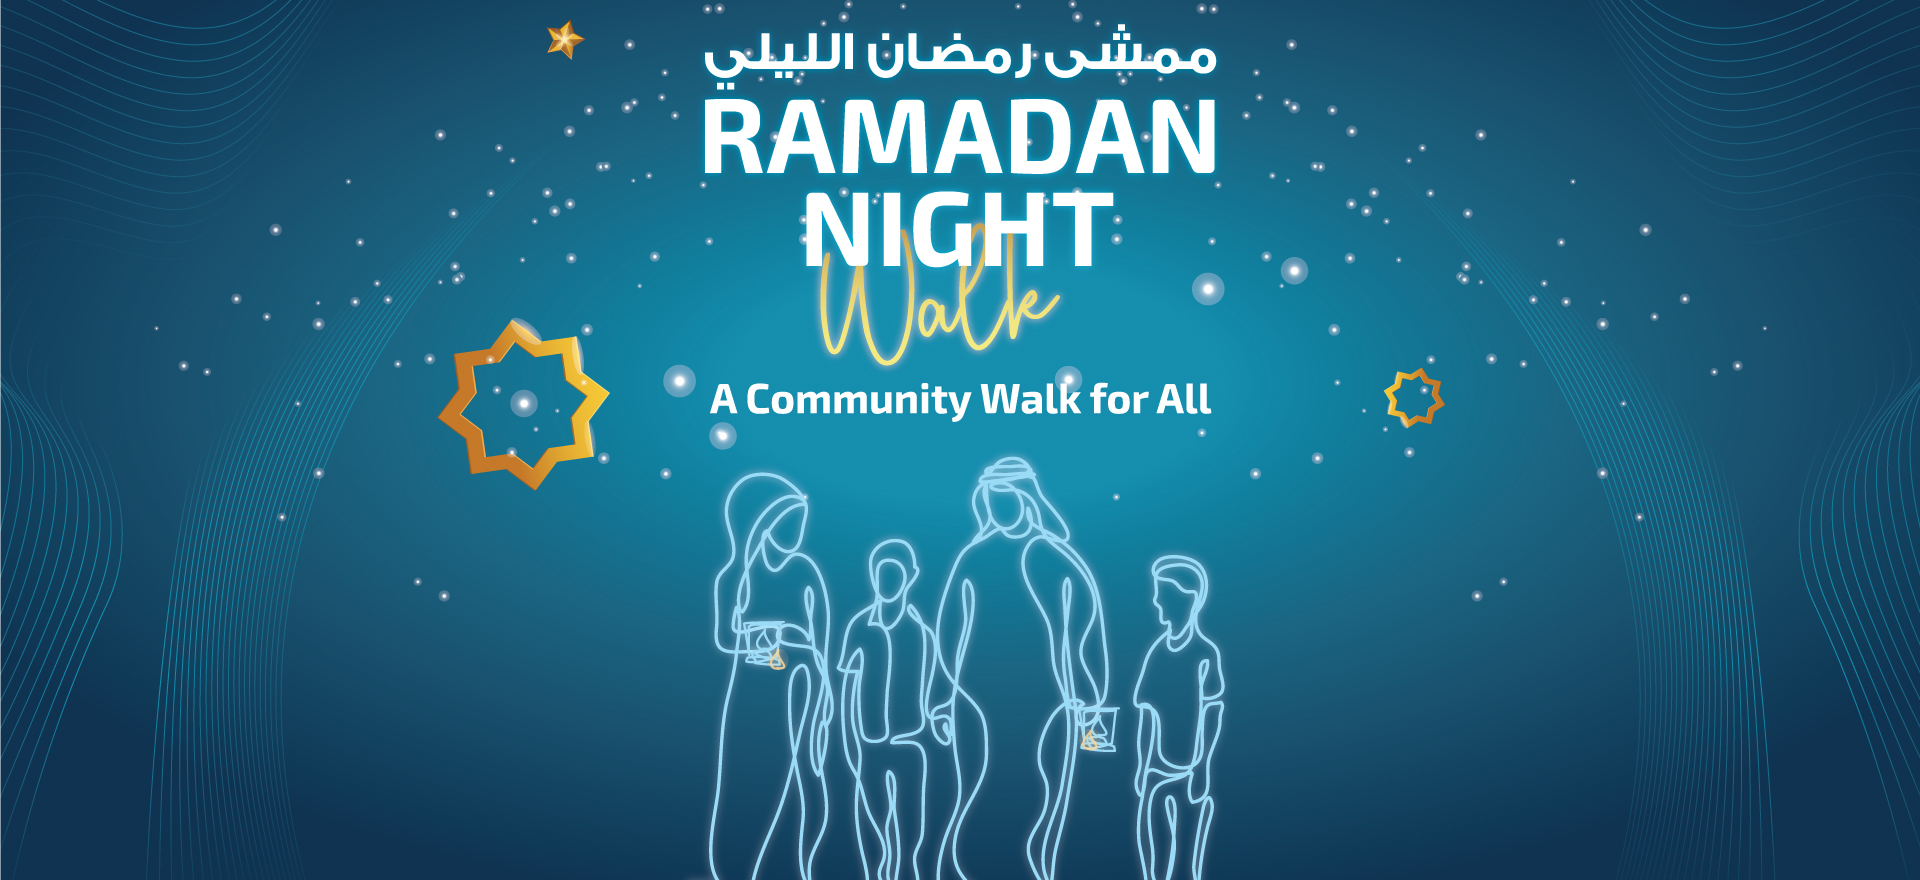 Ramadan Night Walk FittGROUP Home Page Banner